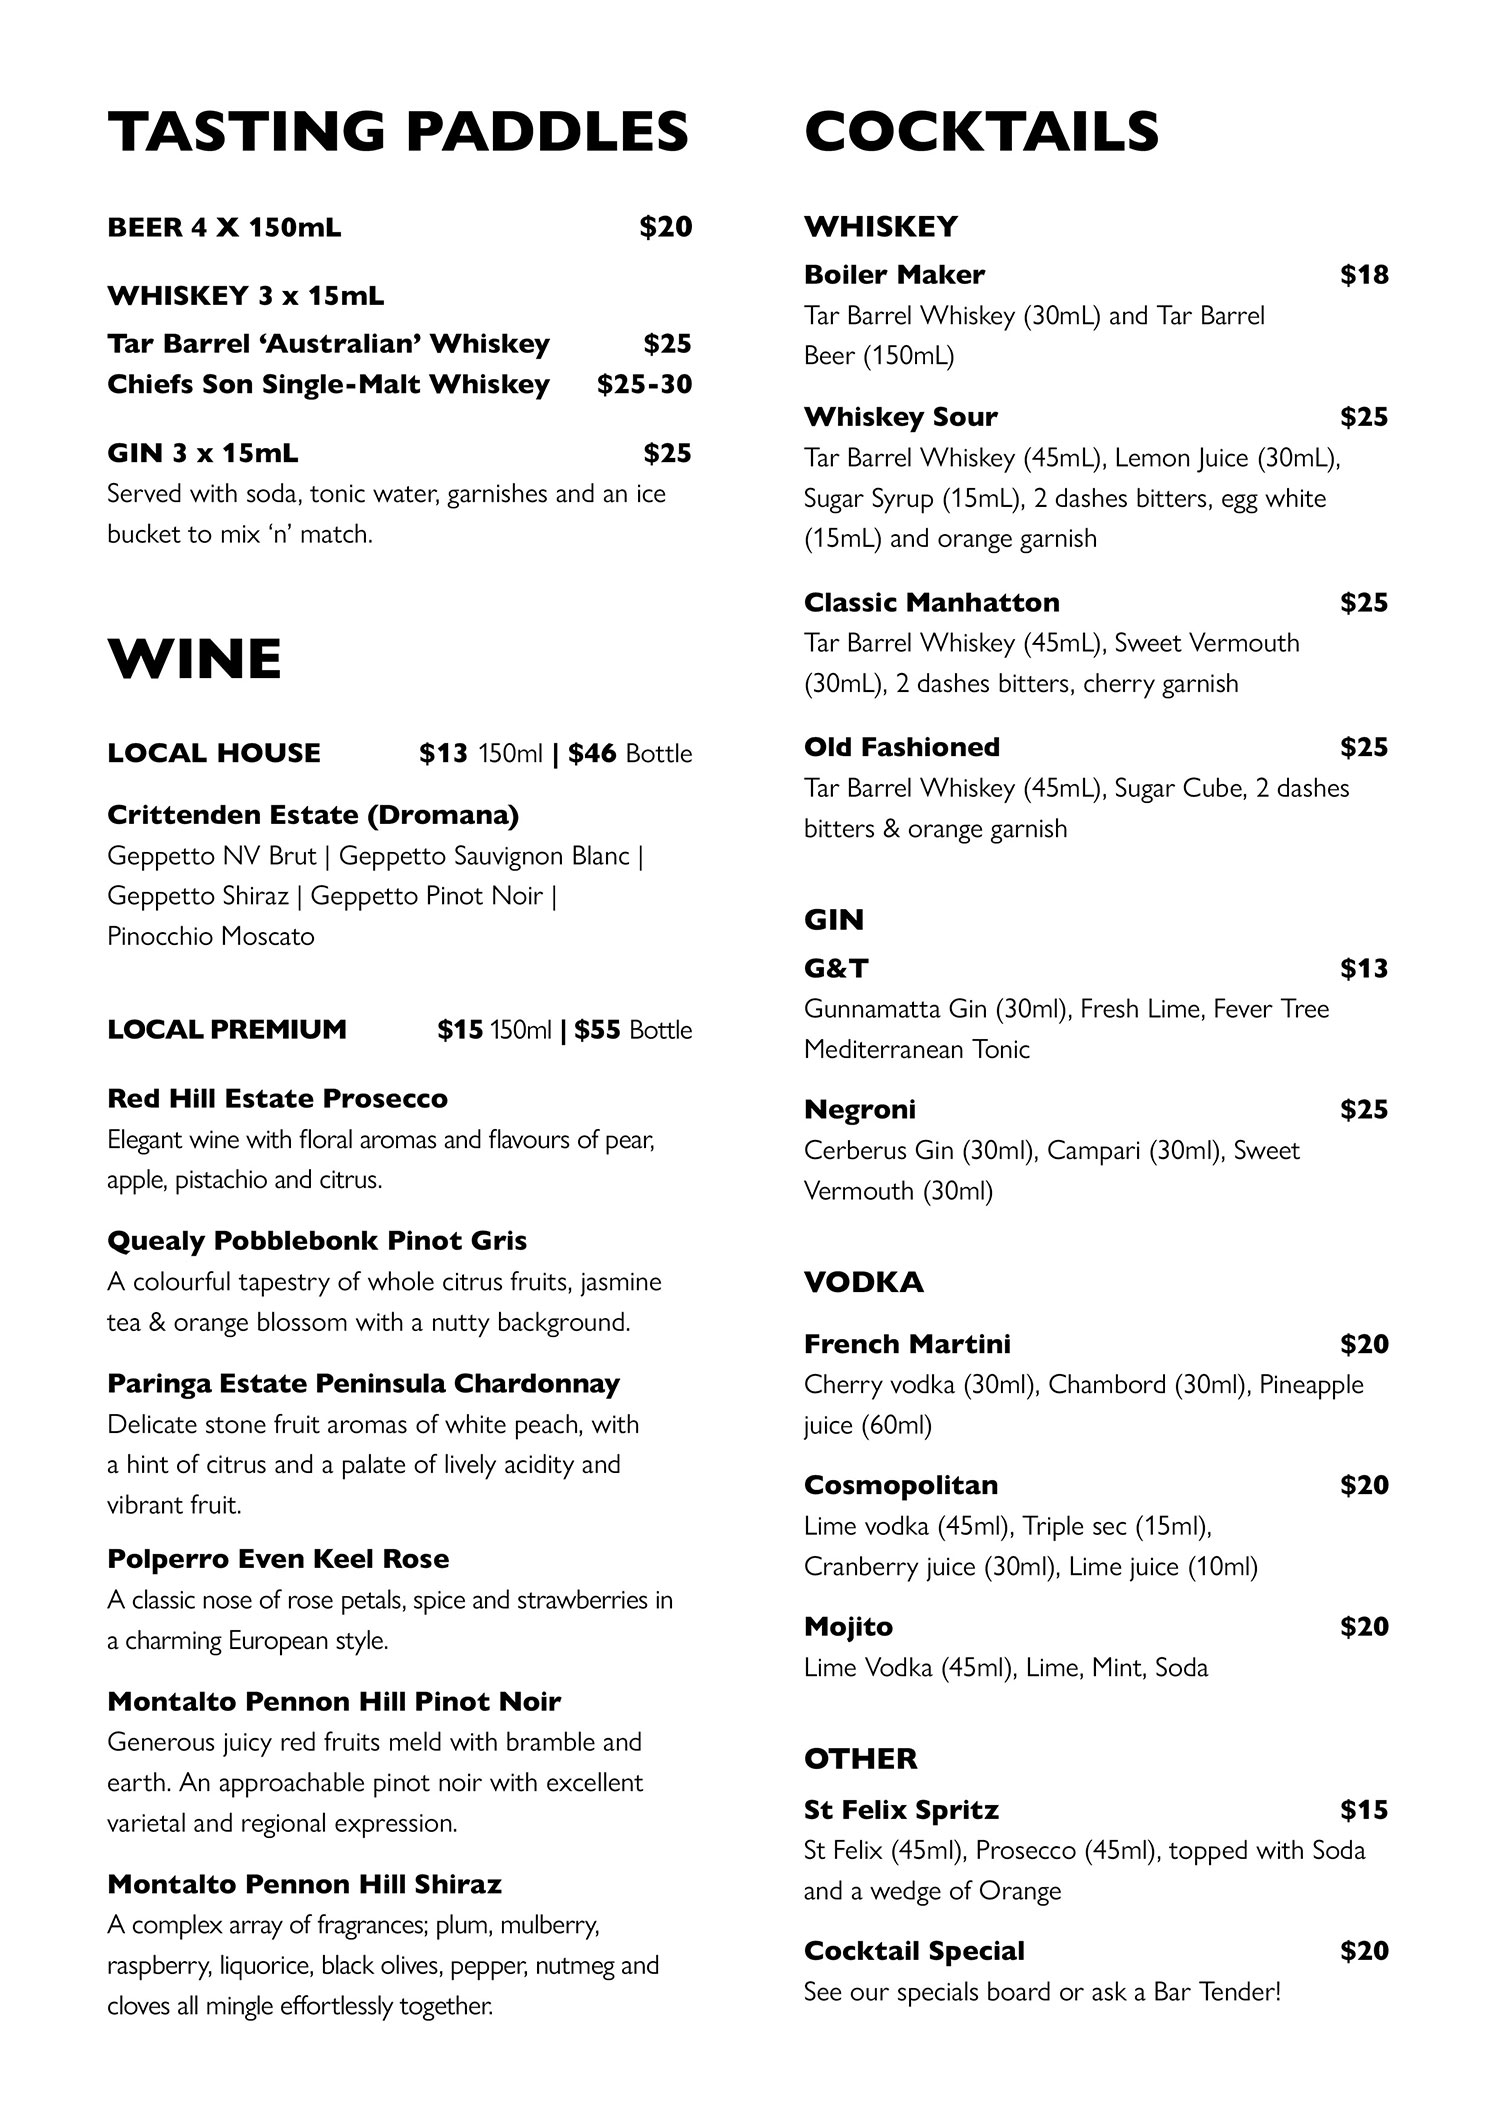 Tar Barrel Wine and Cocktails menu